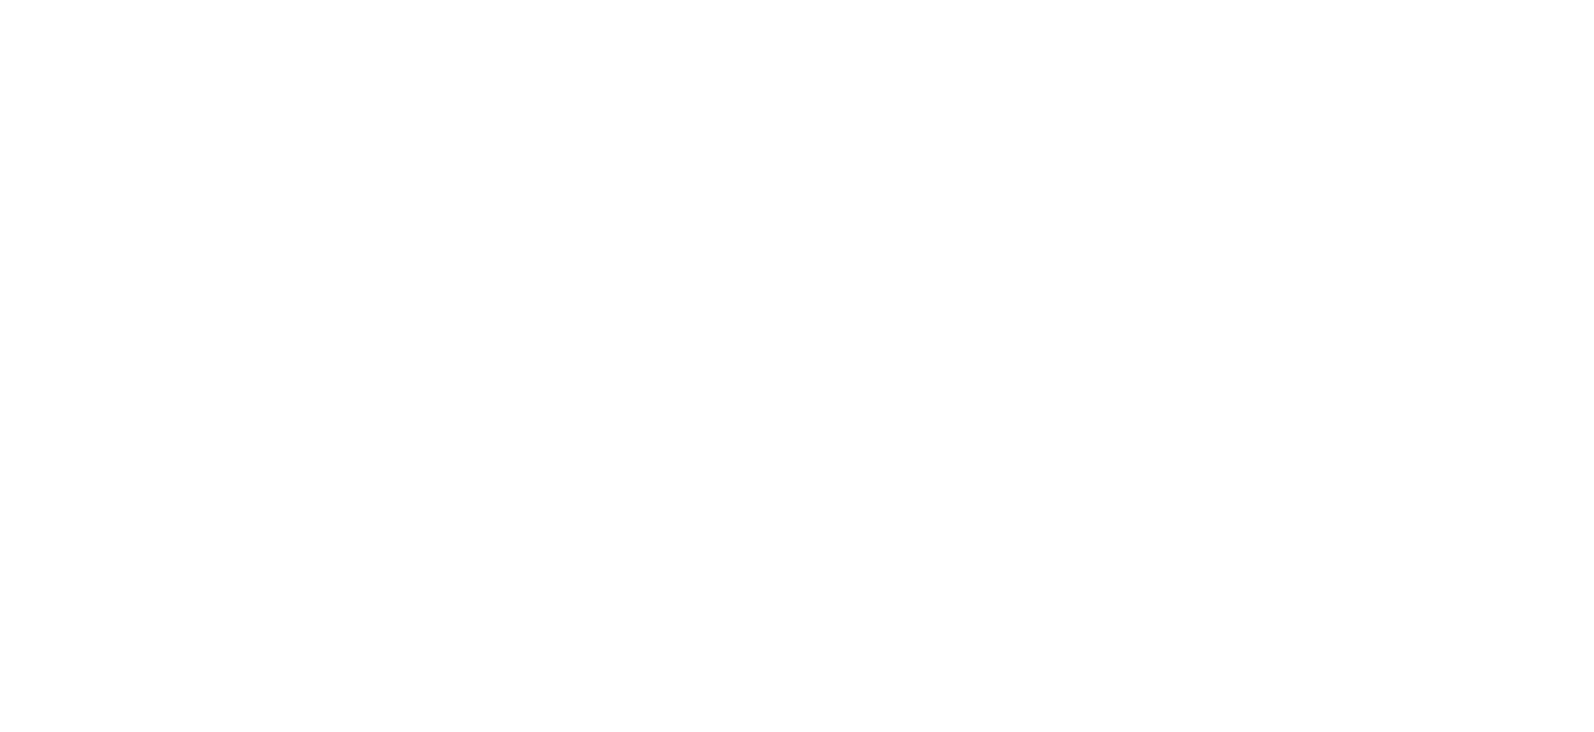 SES S.A. logo large for dark backgrounds (transparent PNG)